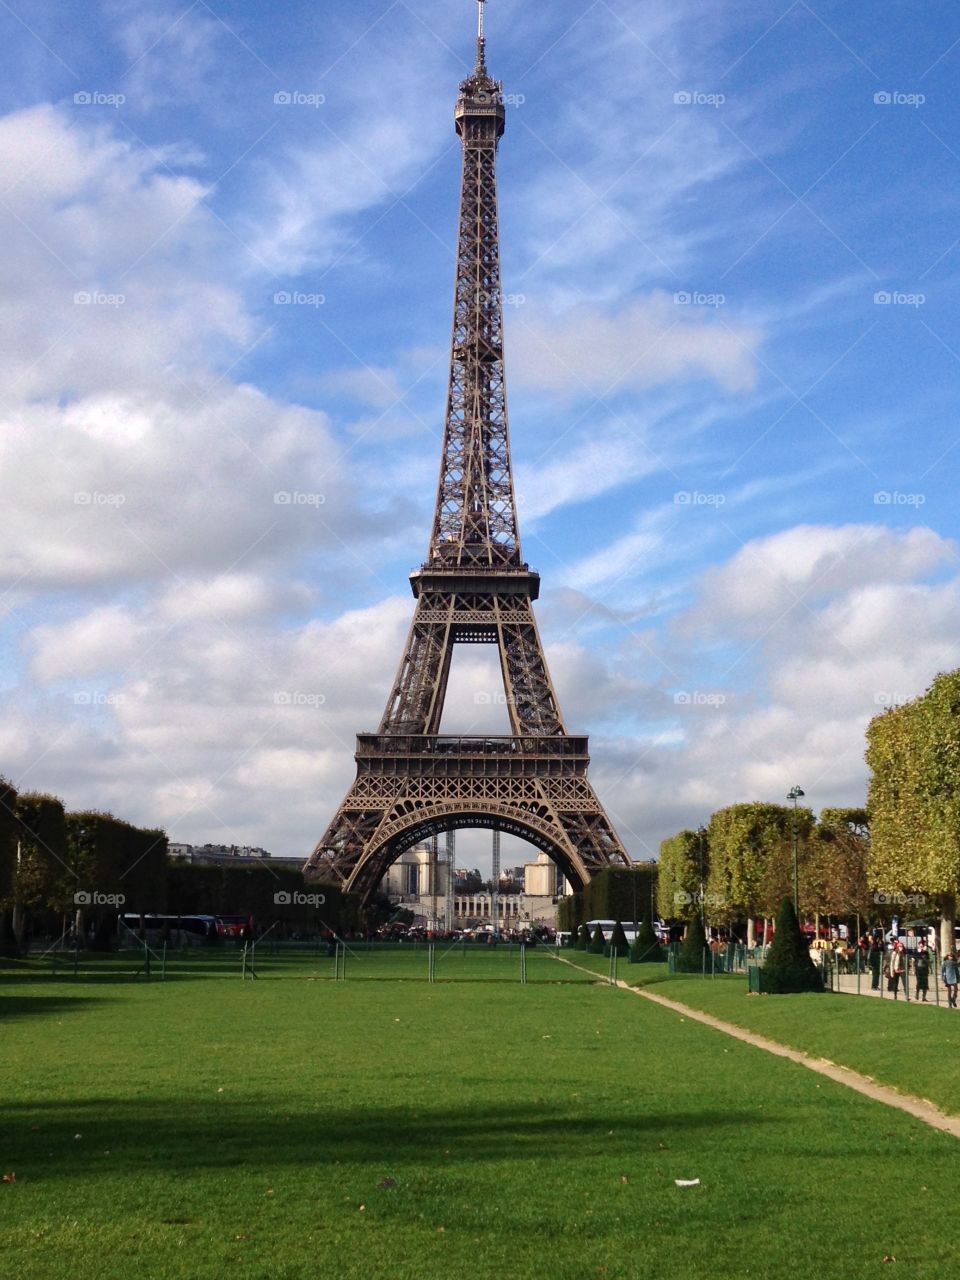 The Eiffel Tower.  